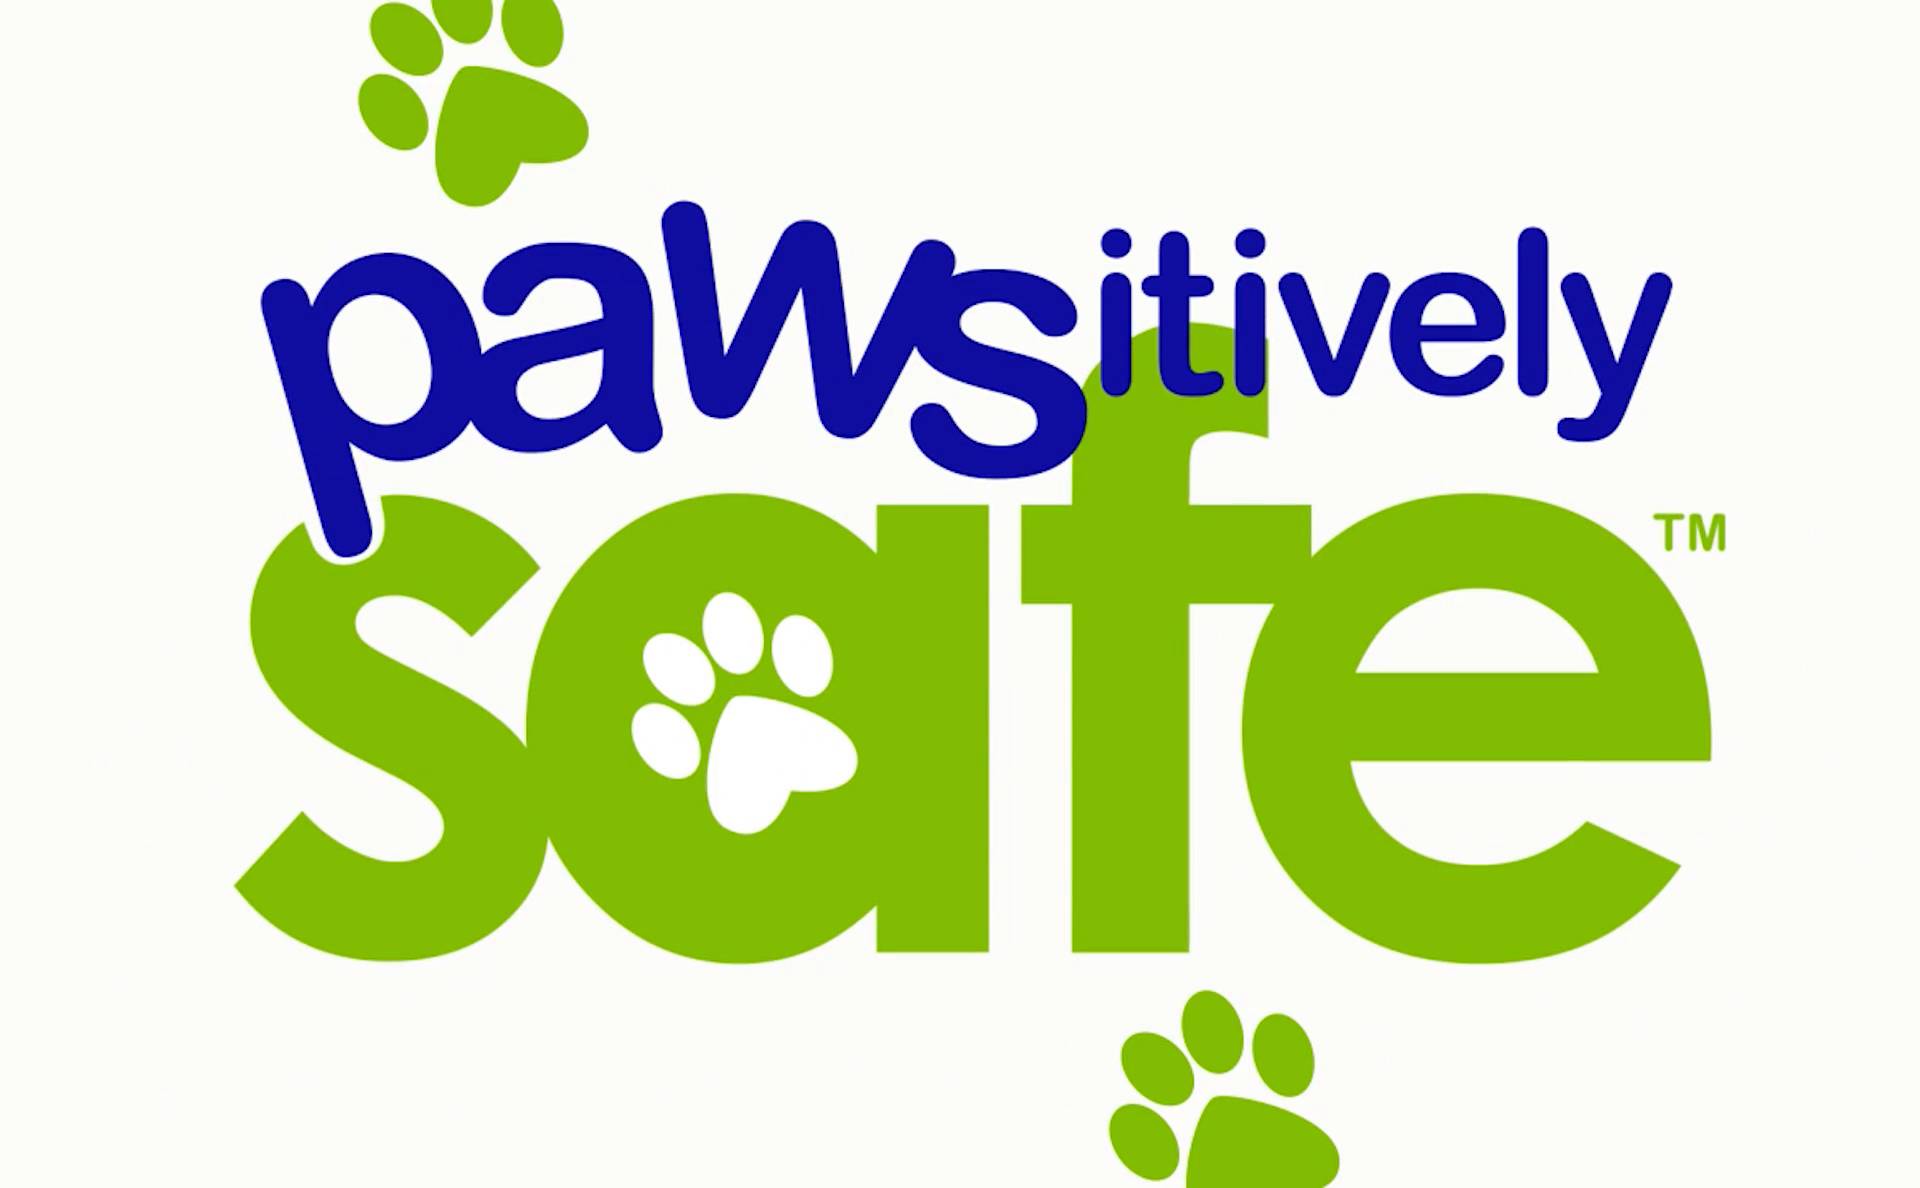 pawsitively safe lost pet finder